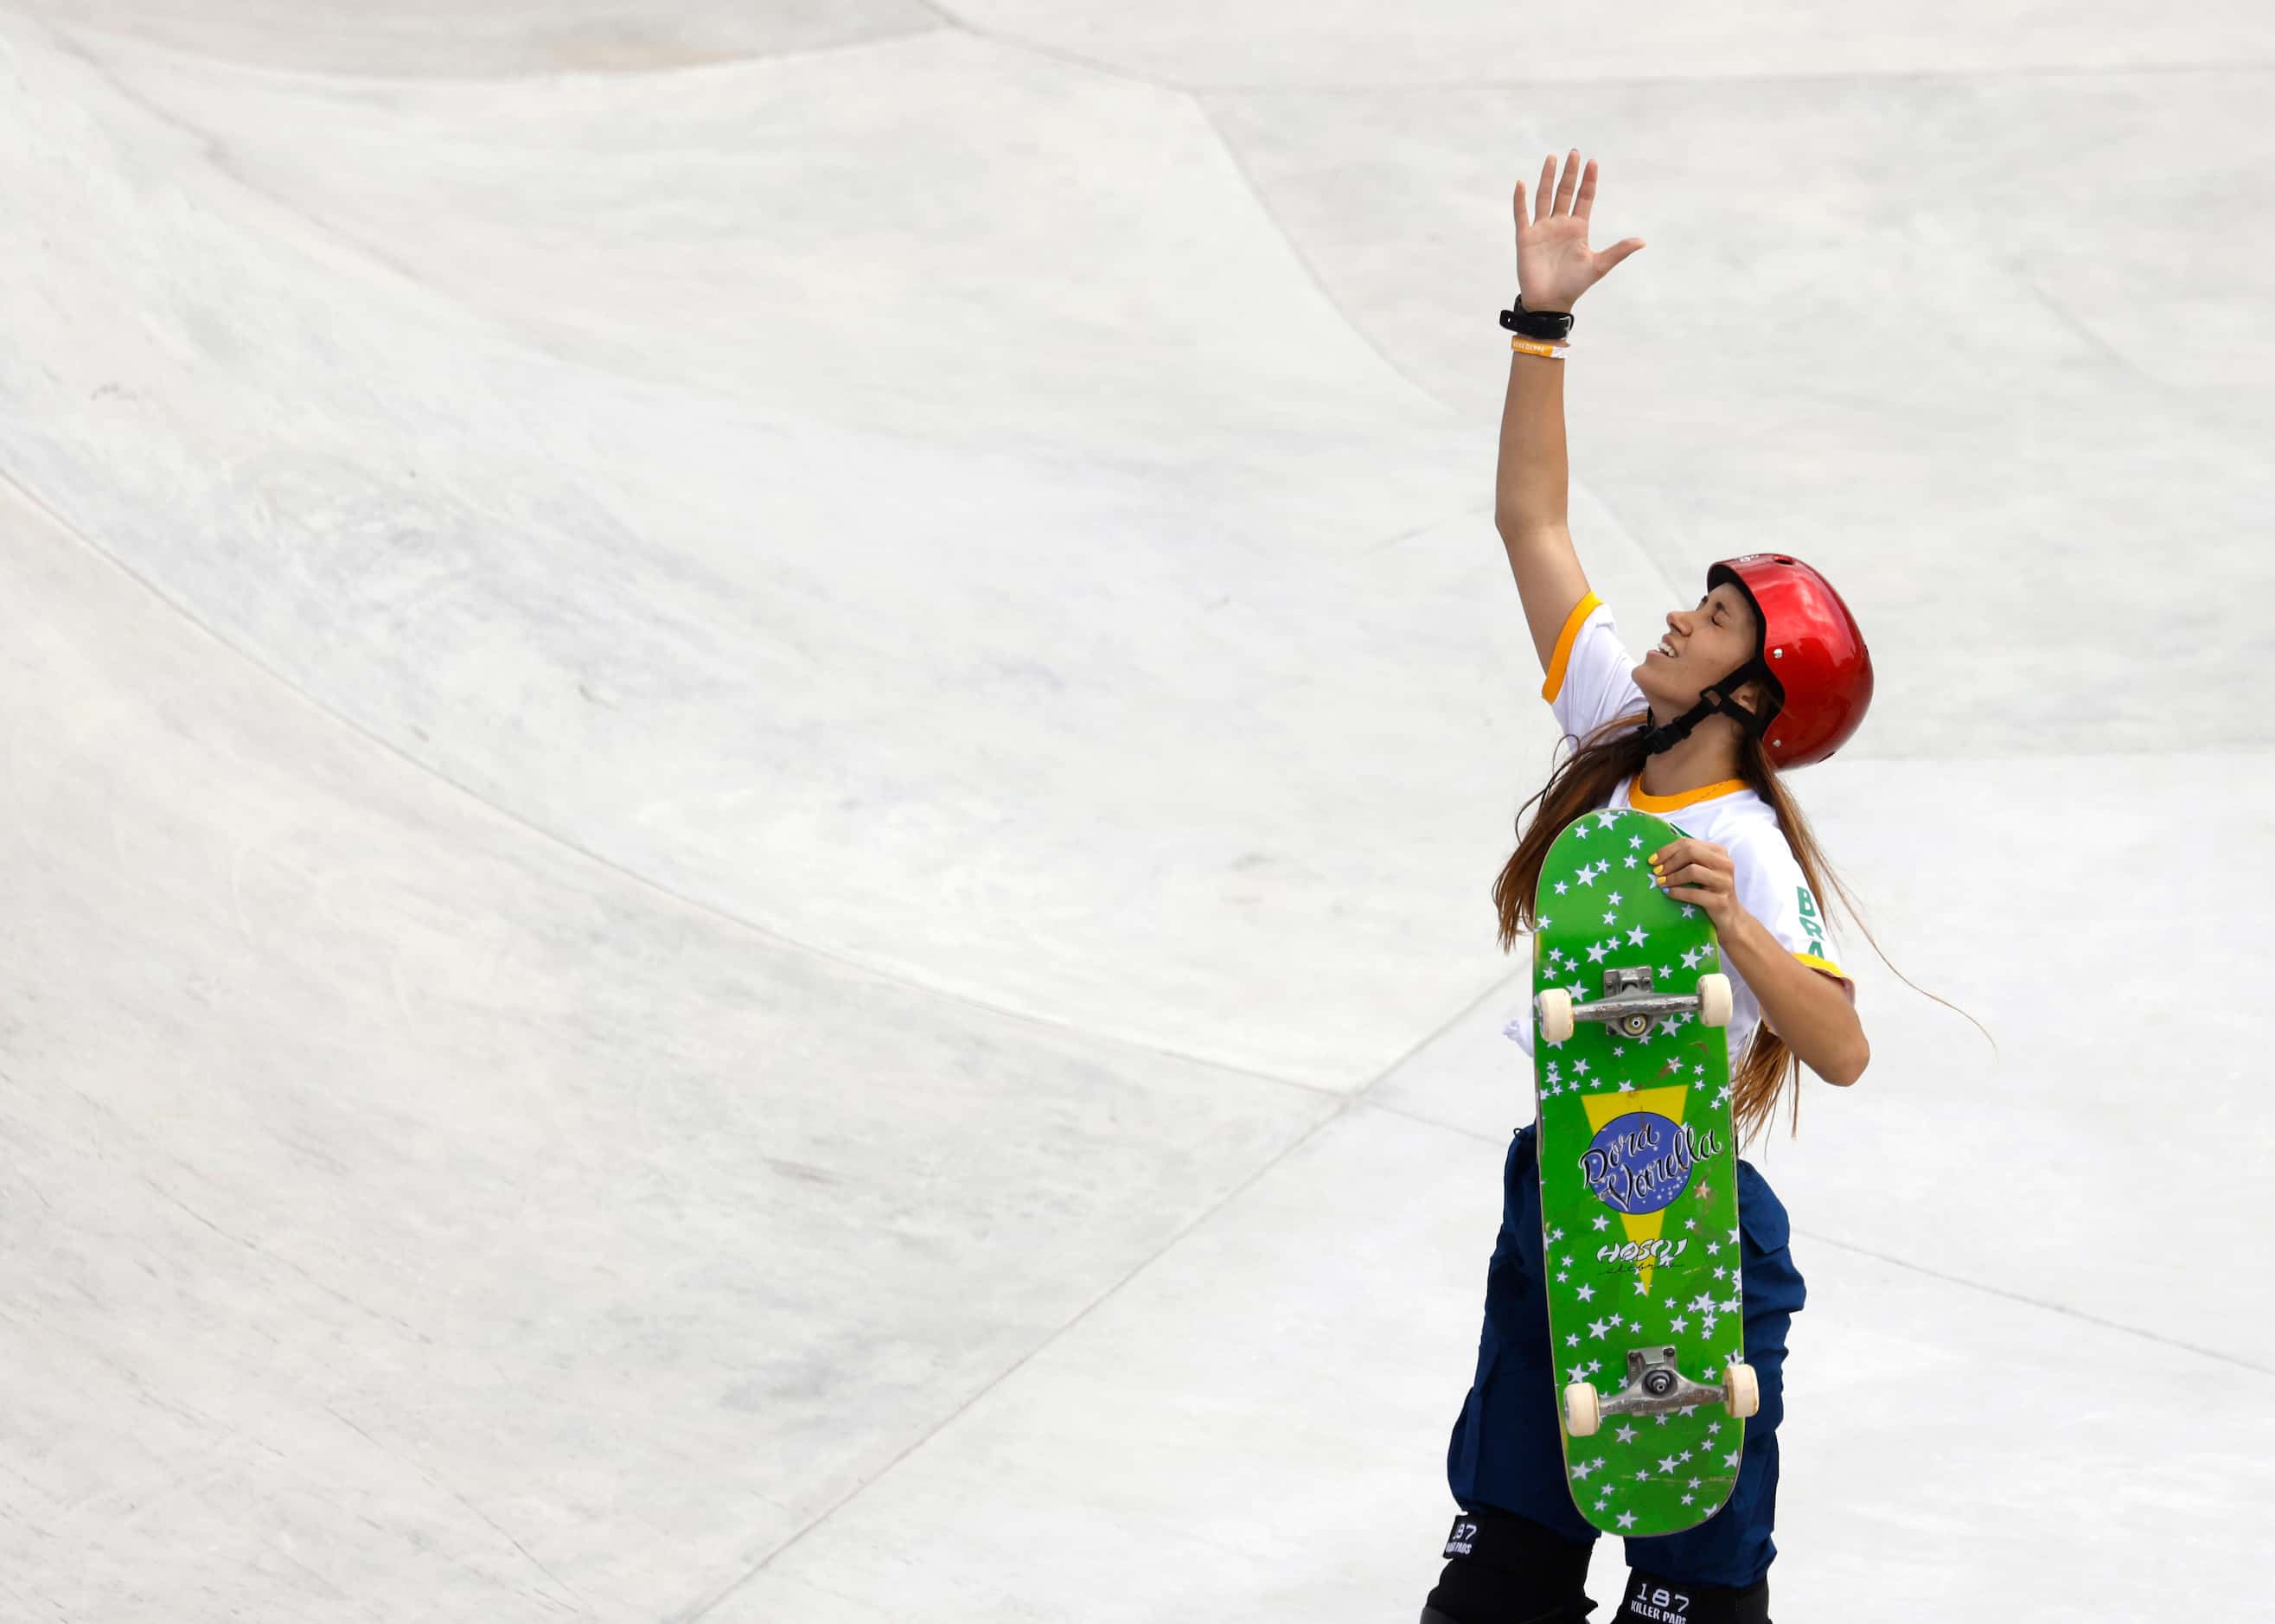 Brazil’s Dora Varella reacts after a run during the women’s skateboarding prelims at the...